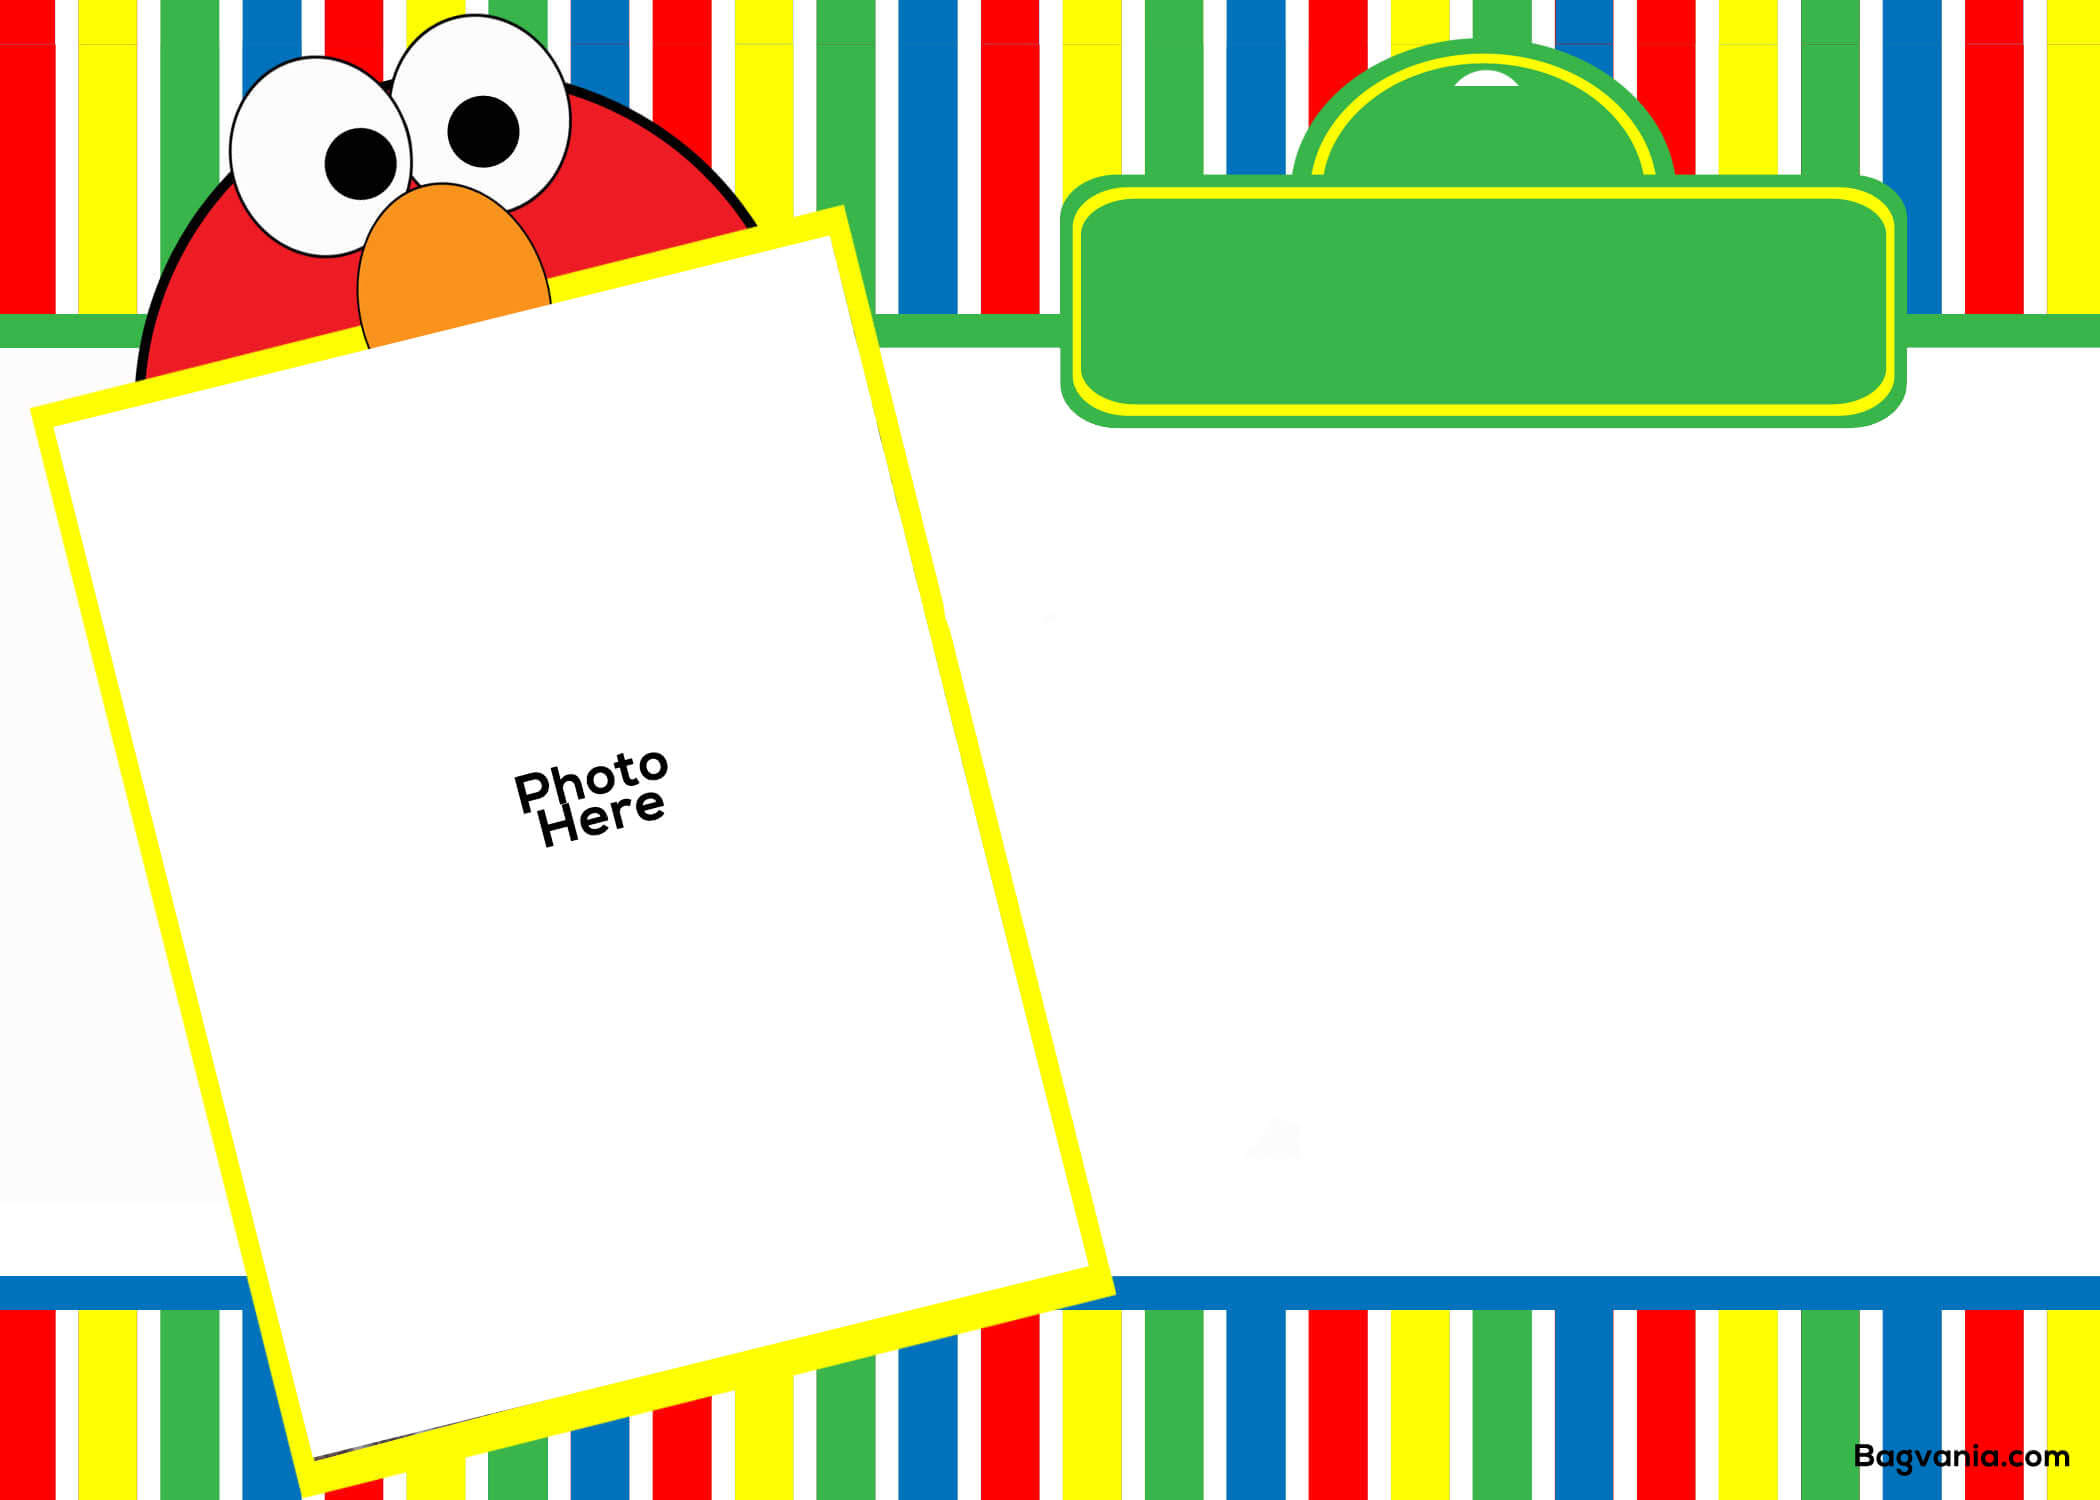 Free Printable Elmo Birthday Invitations – Bagvania With Elmo Birthday Card Template